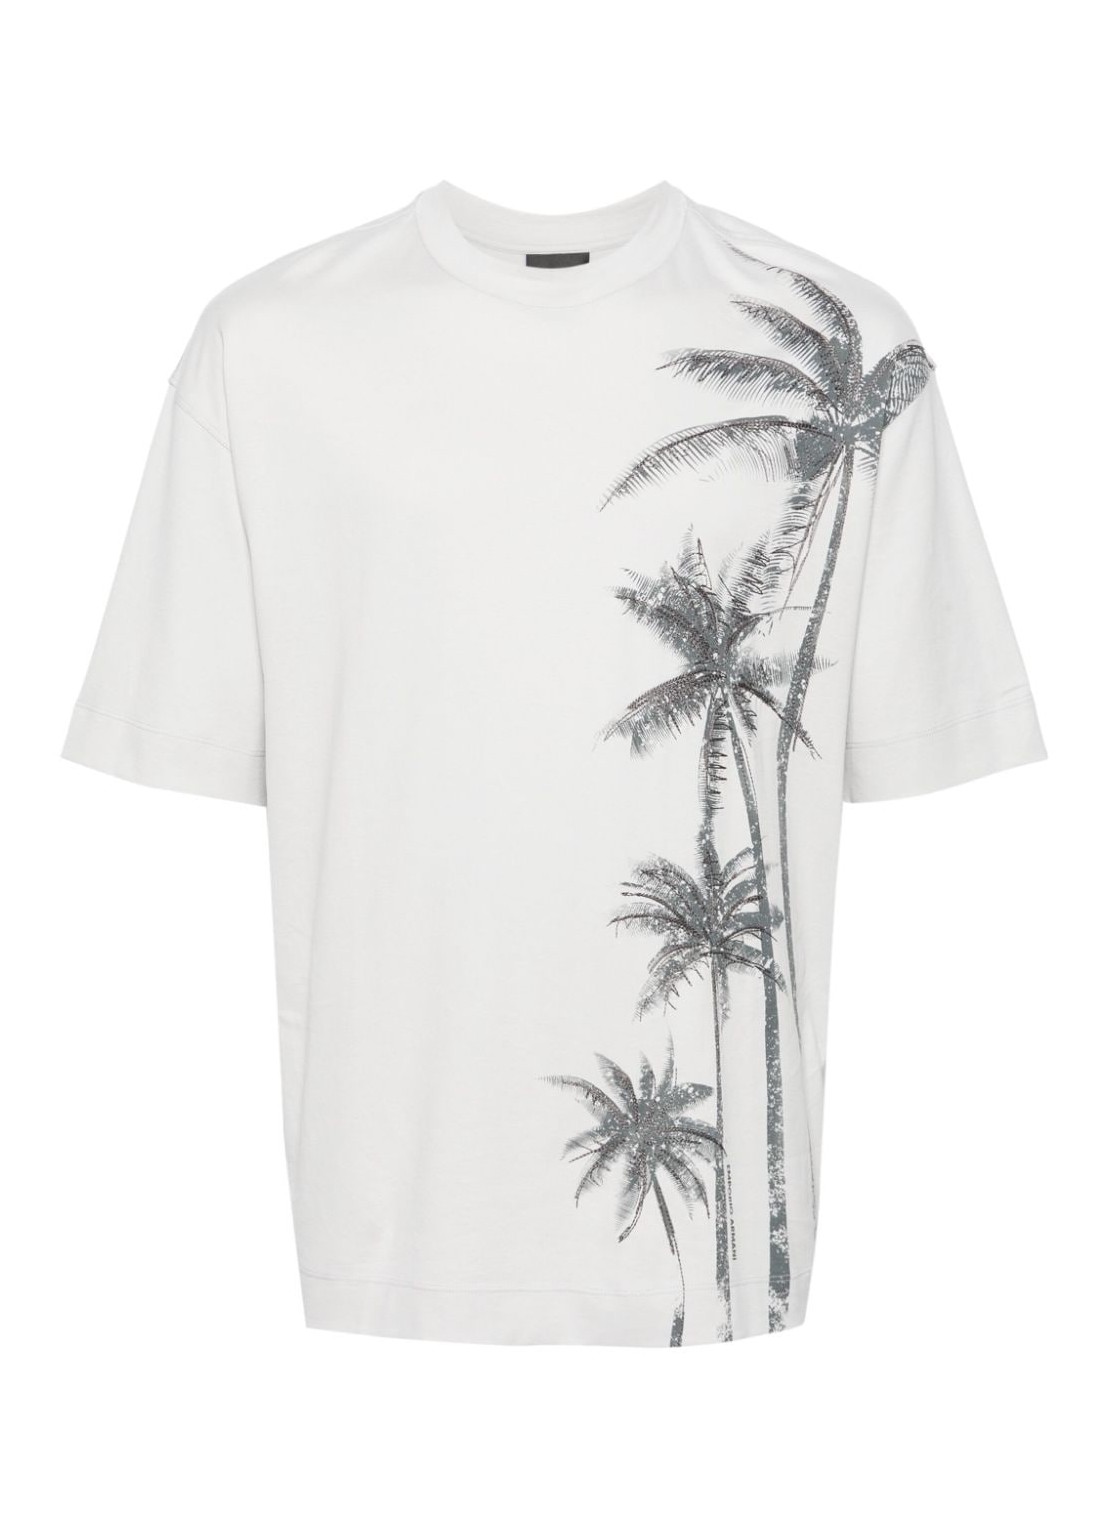 Camiseta emporio armani t-shirt manth2 - 3d1th21jocz 0646 talla gris
 